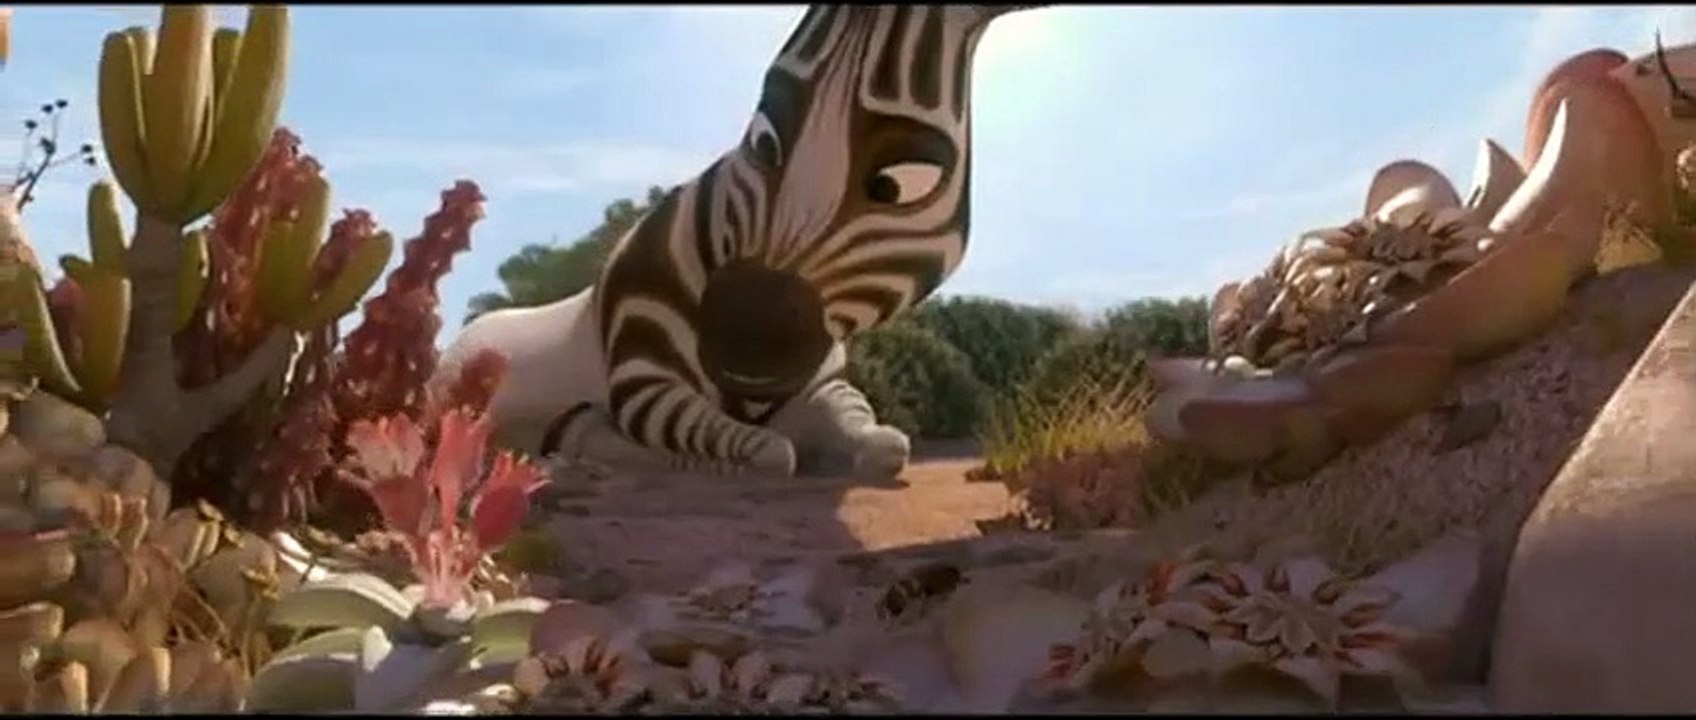 Khumba - Das Zebra ohne Streifen am Popo Trailer DF